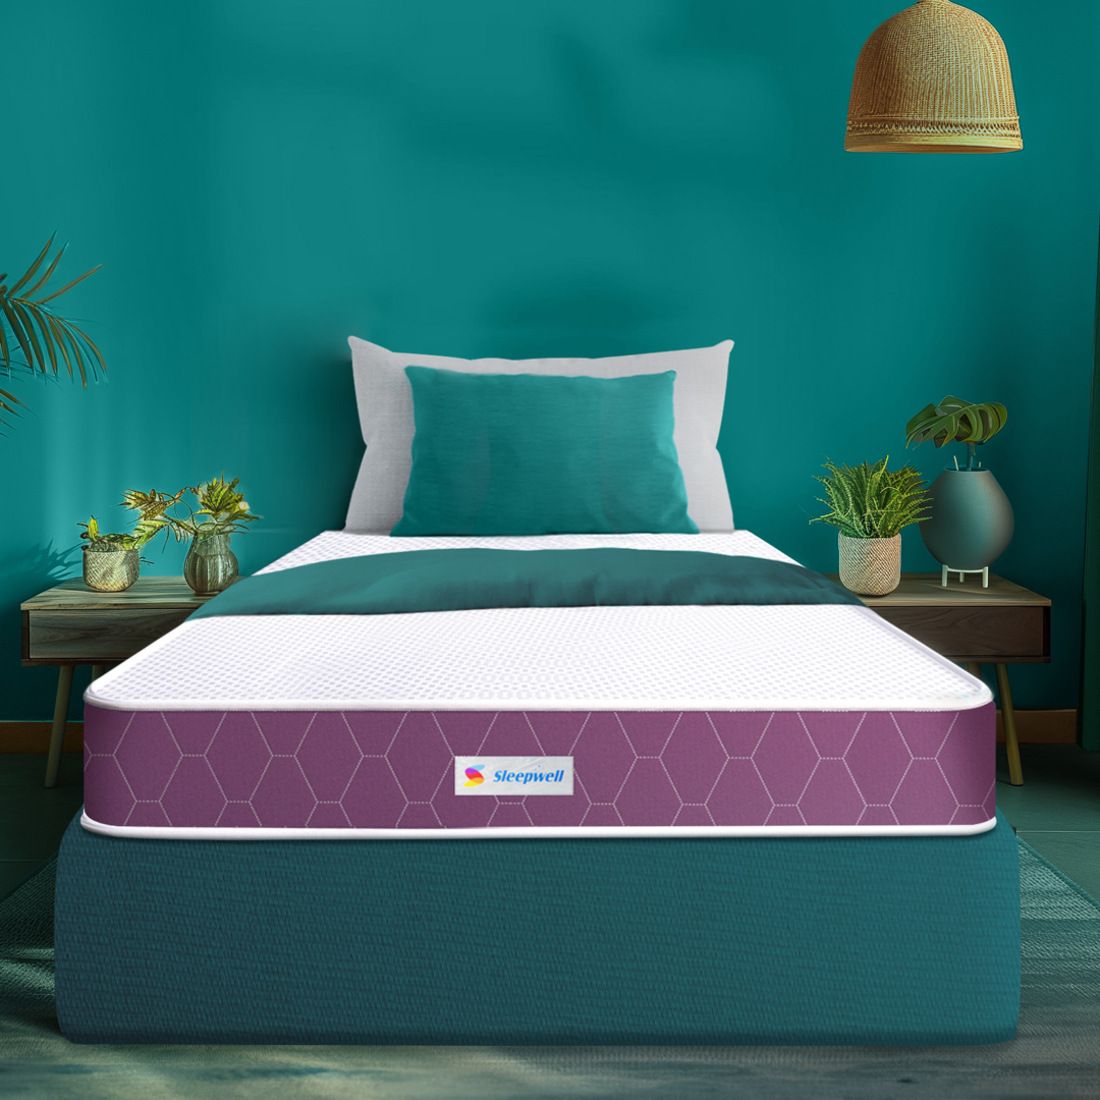 Sleepwell Ortho Mattress | Quilted | 5-inch Single Bed Size, Impressions Memory Foam, Medium Firm Mattress(Purple, 84x35x5 )